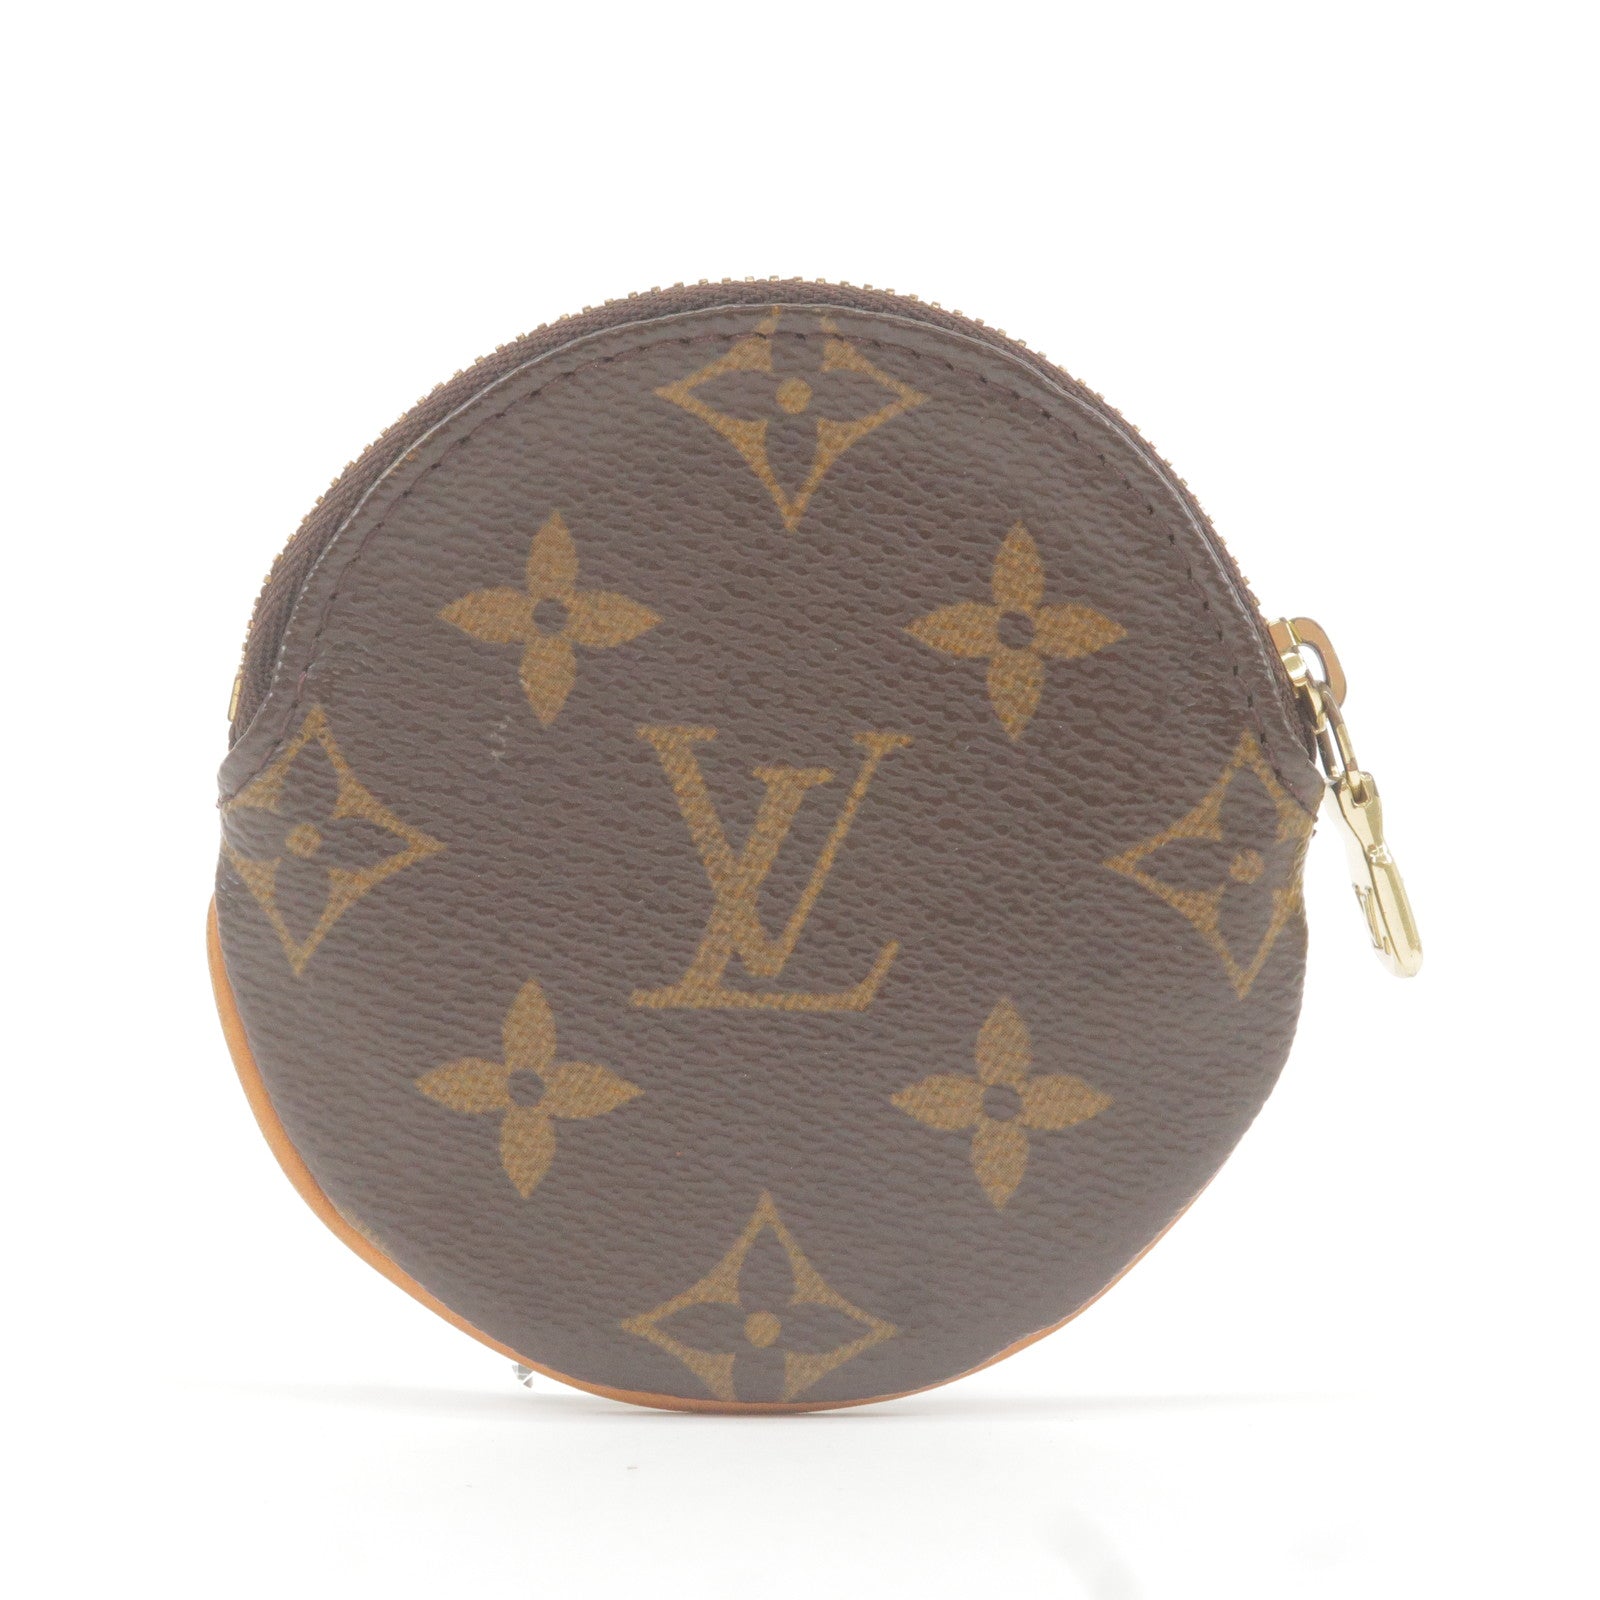 Louis Vuitton Suhali Mini Lockit Gold Color Bag Charm Keychain -   Denmark